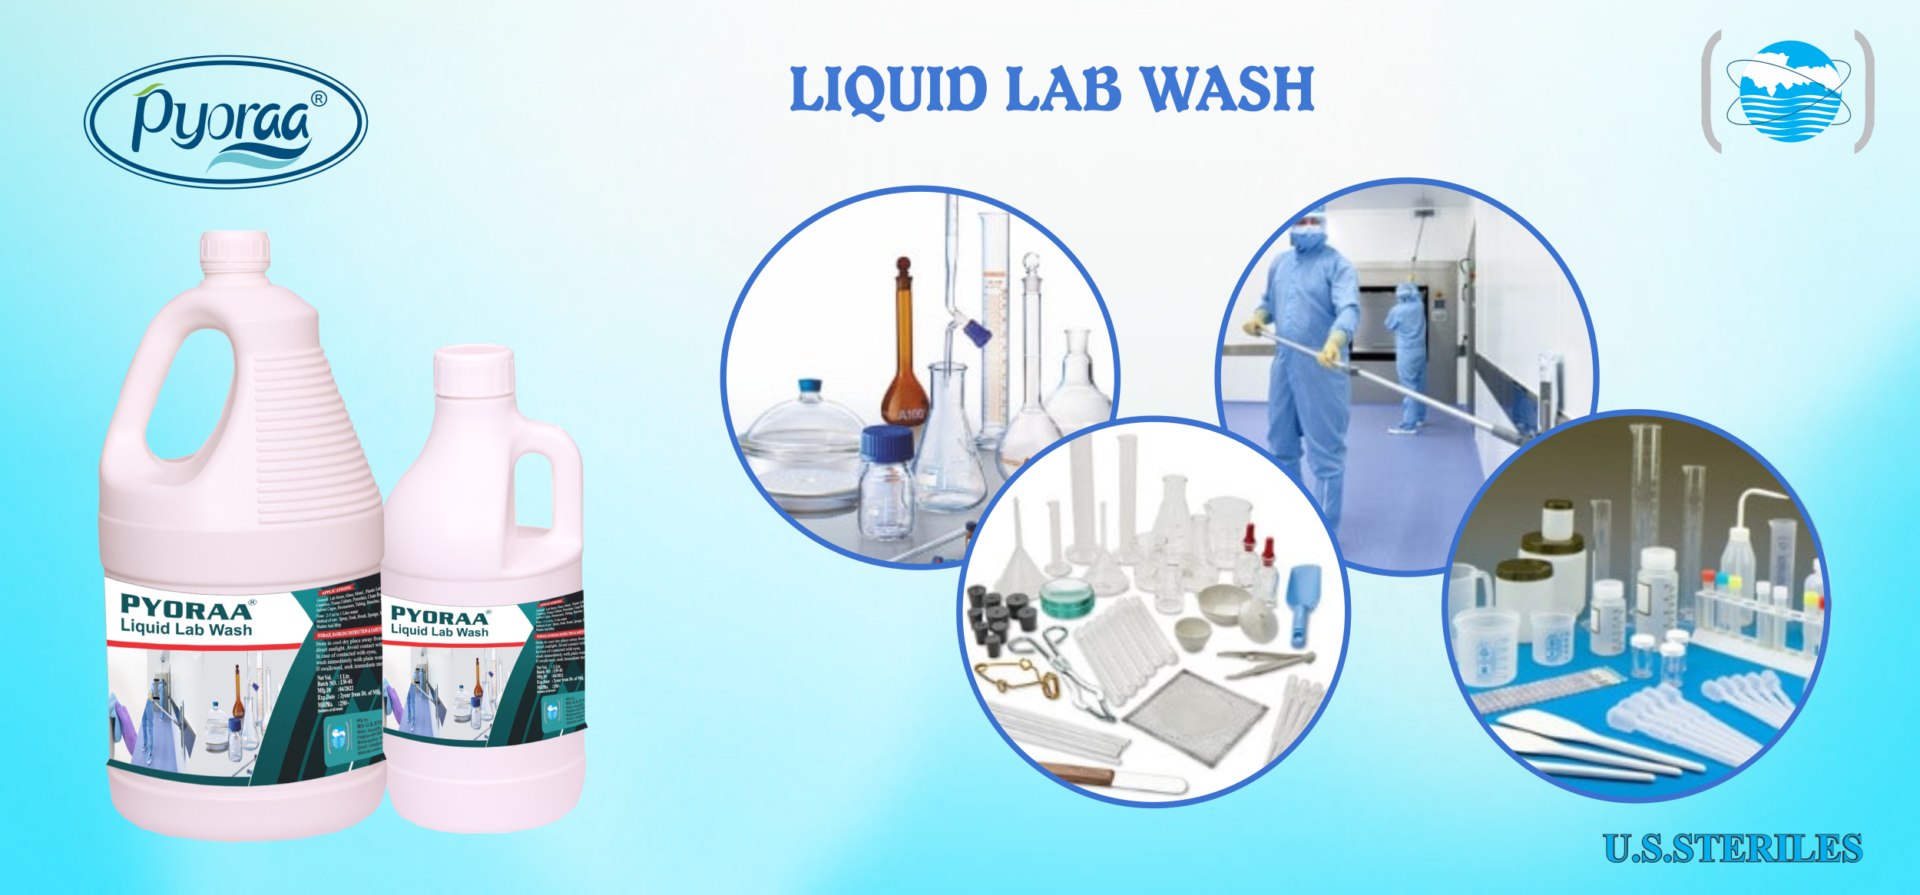 Liquid Lab wash